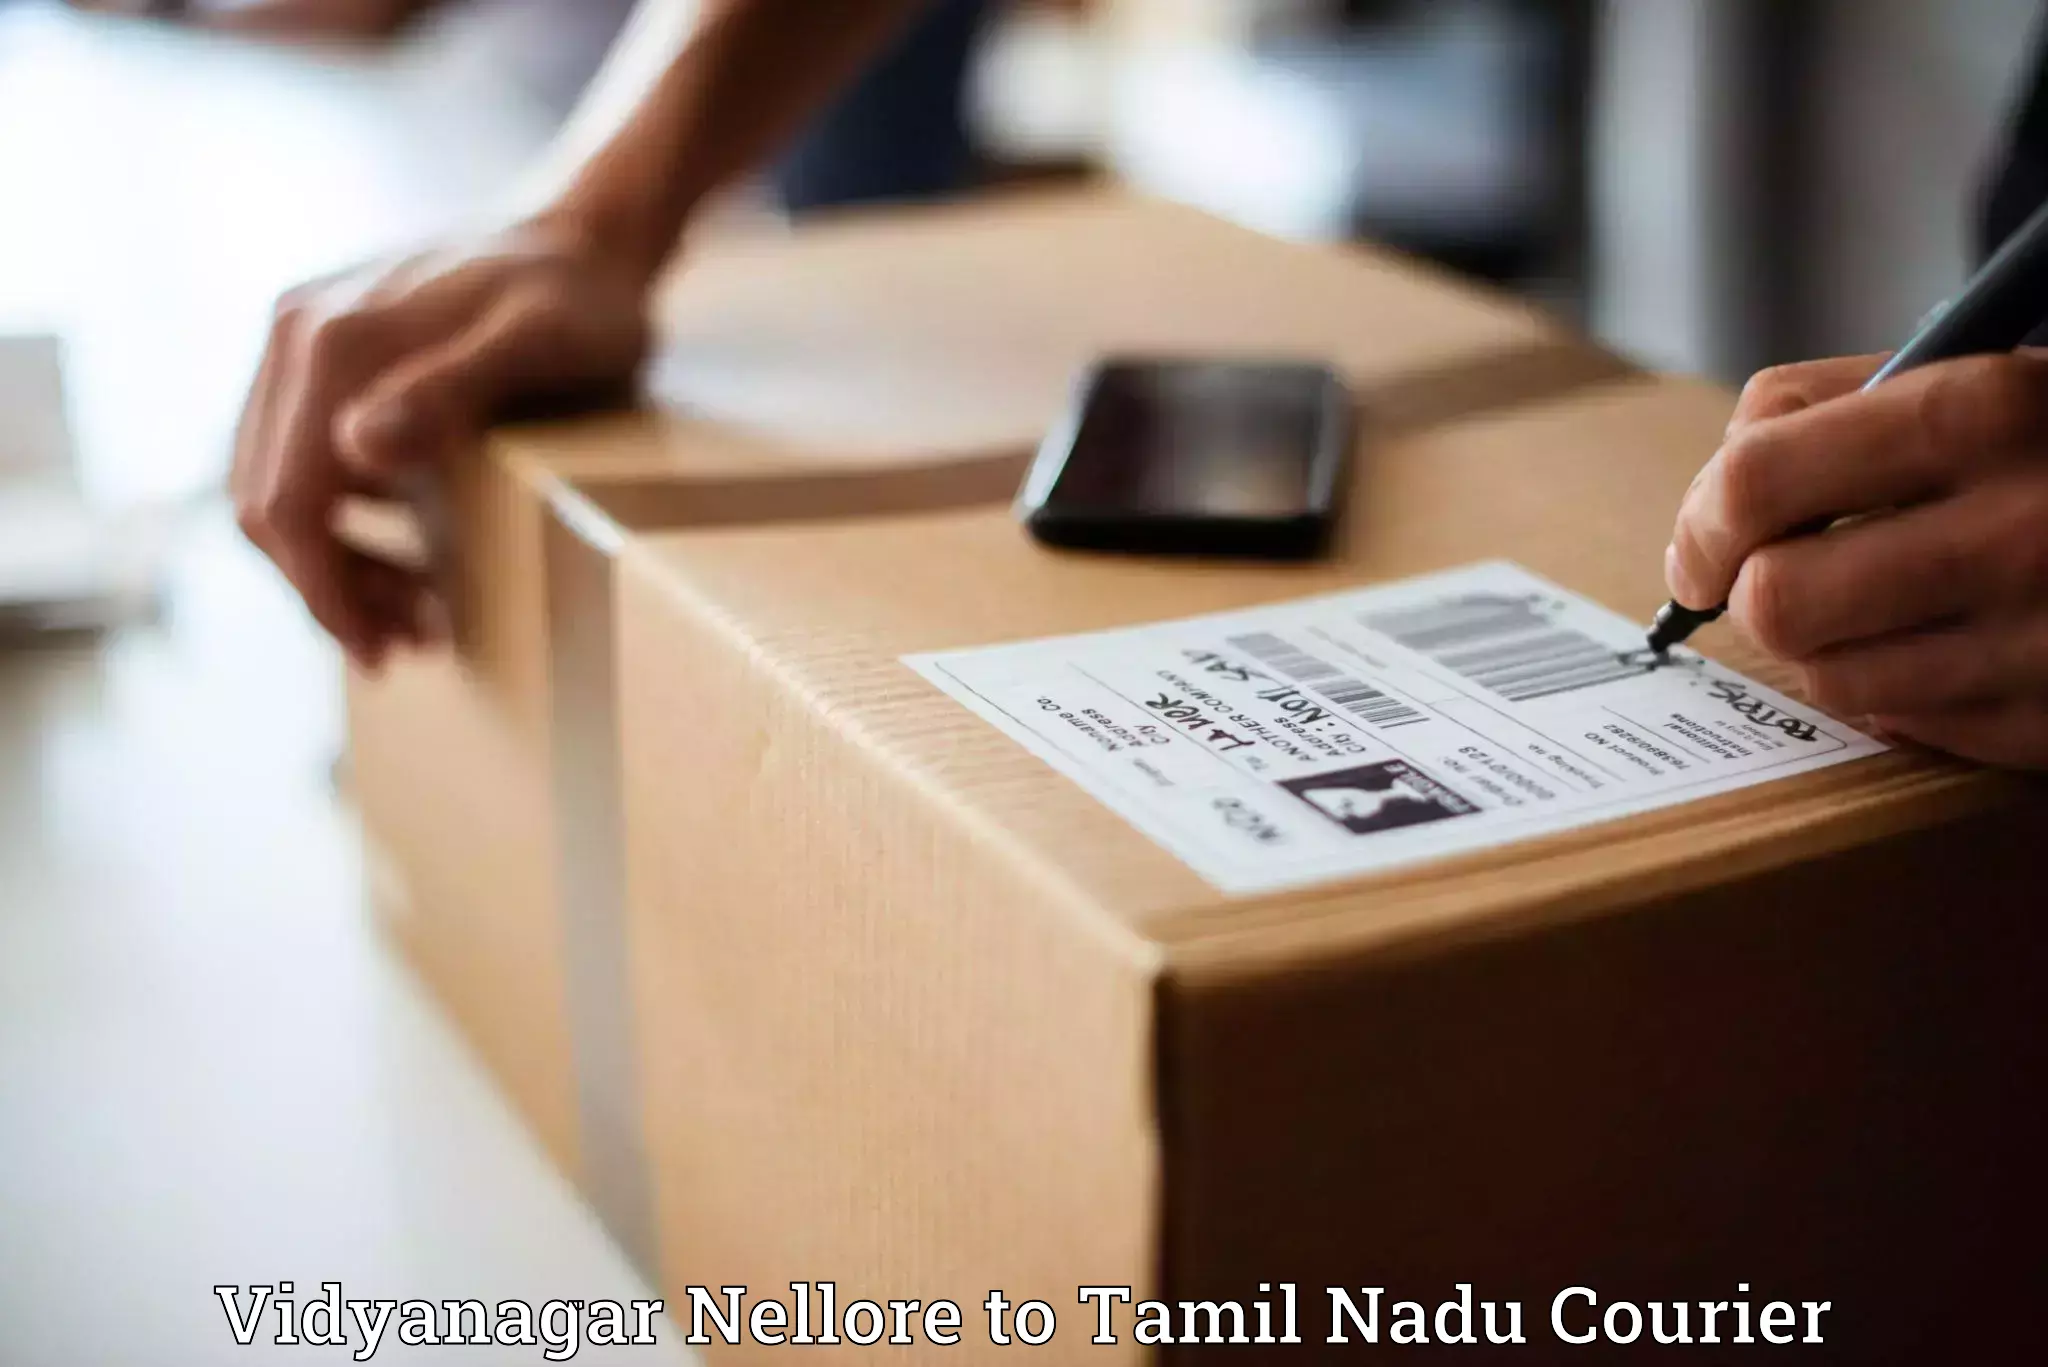 Custom courier packaging Vidyanagar Nellore to Peralam